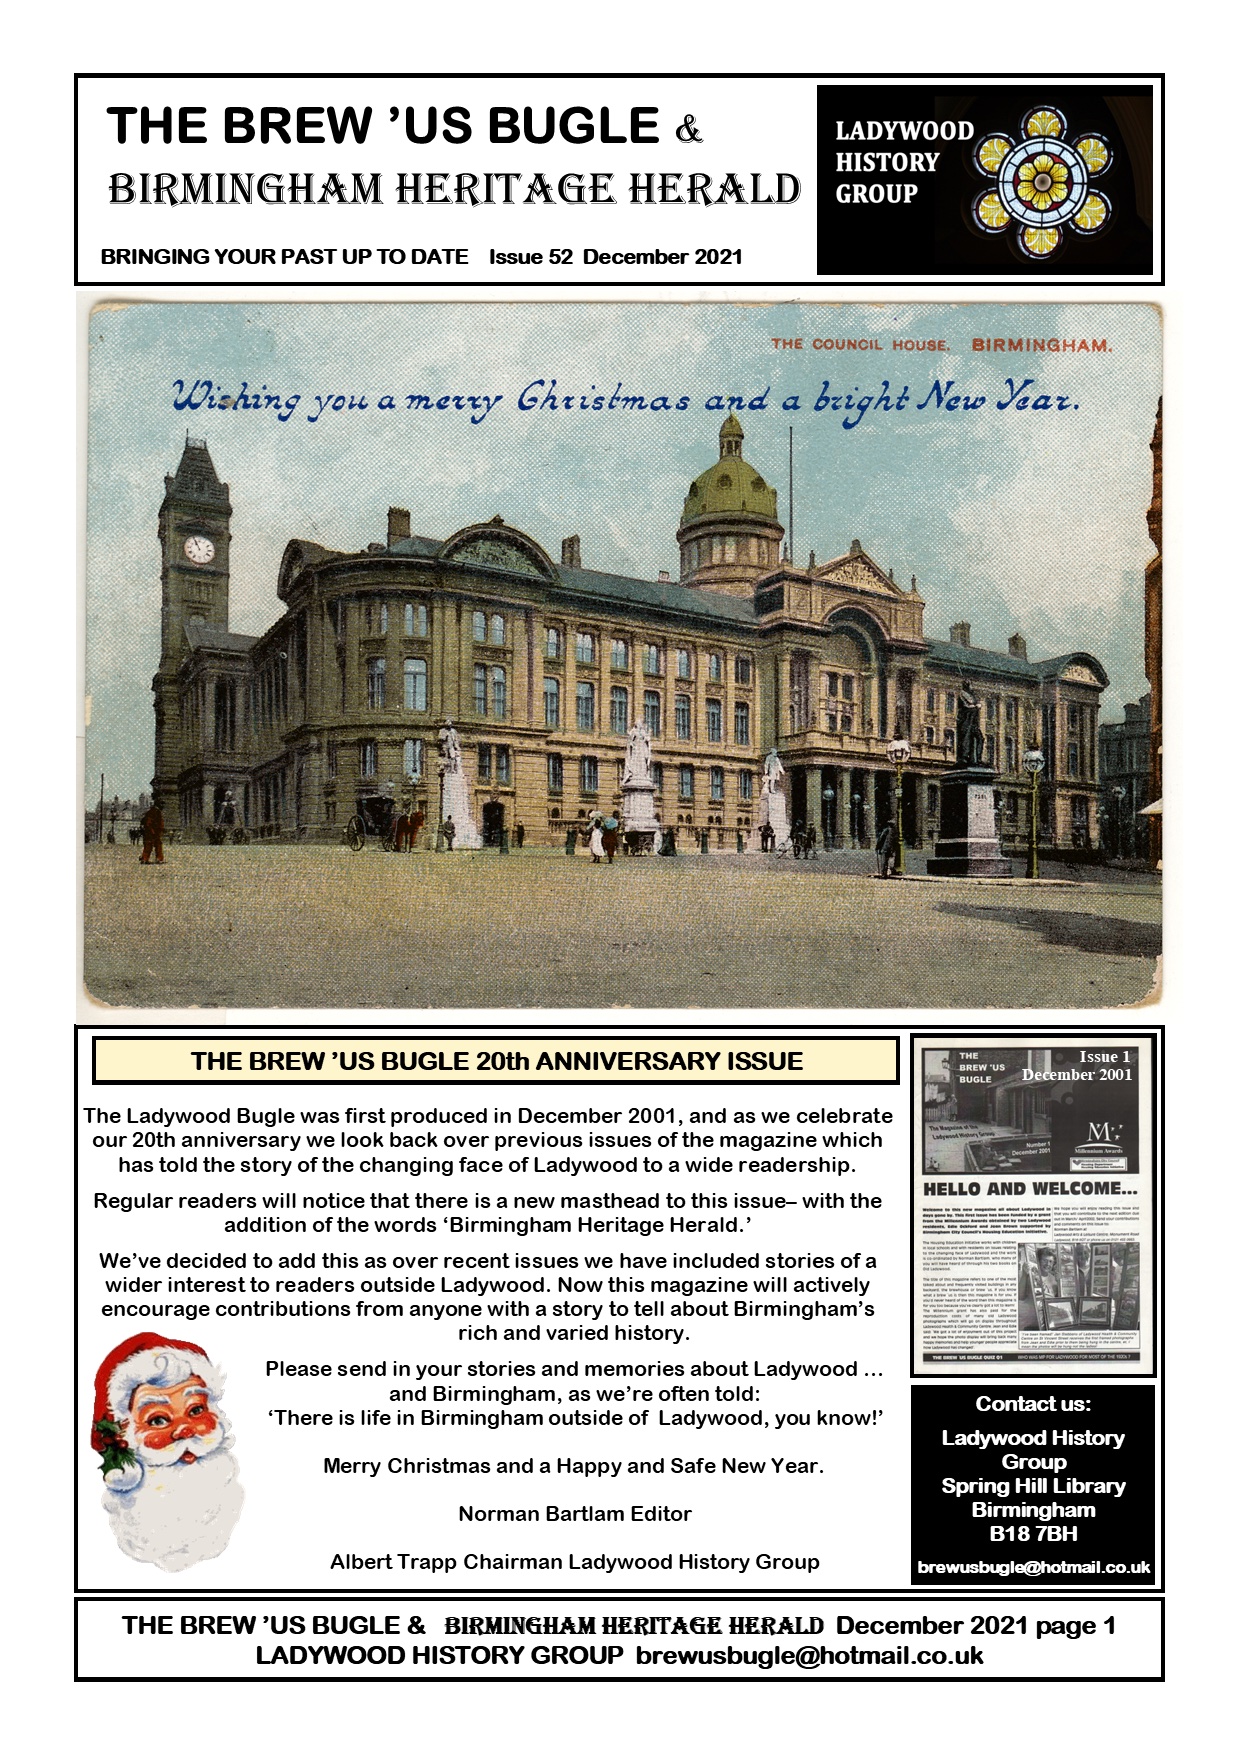 The Brew 'Us Bugle & Birmingham Heritage Herald issue 52 December 2021